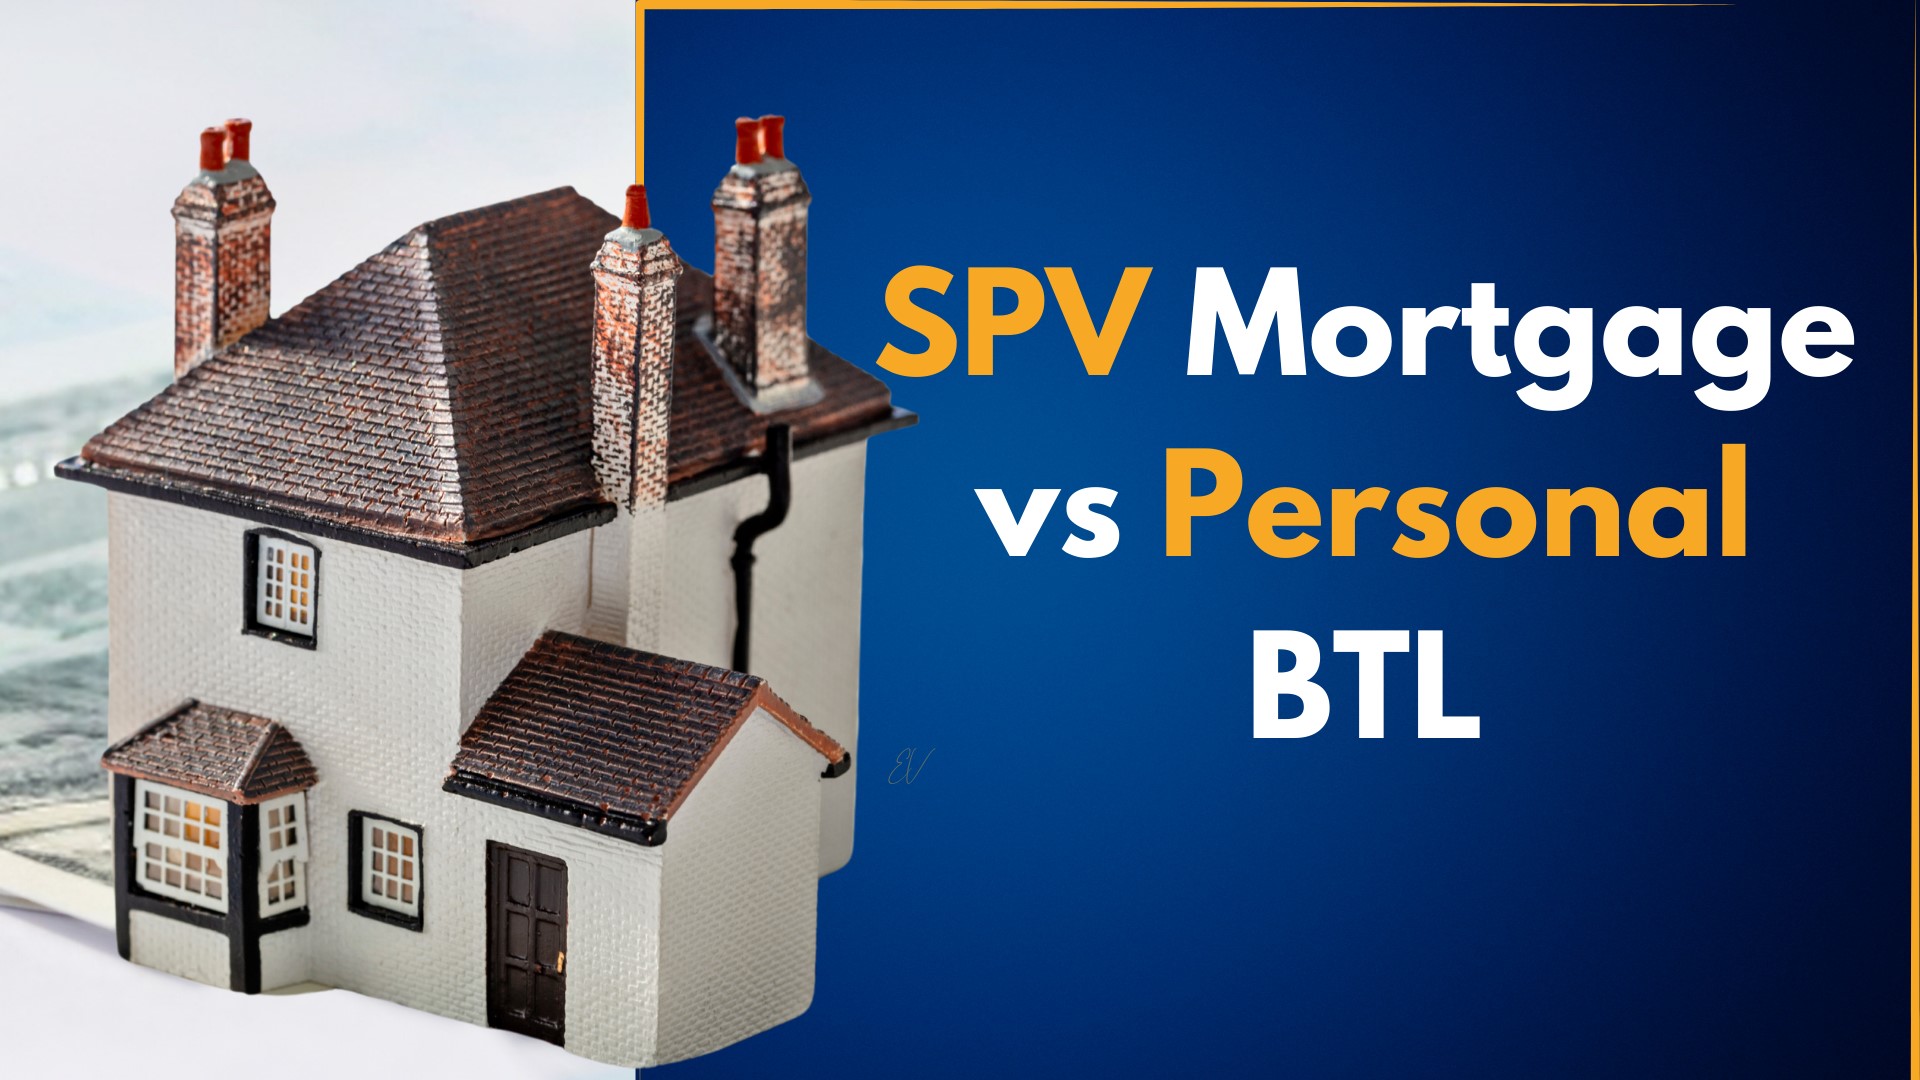 SPV mortgage vs personal BTL image